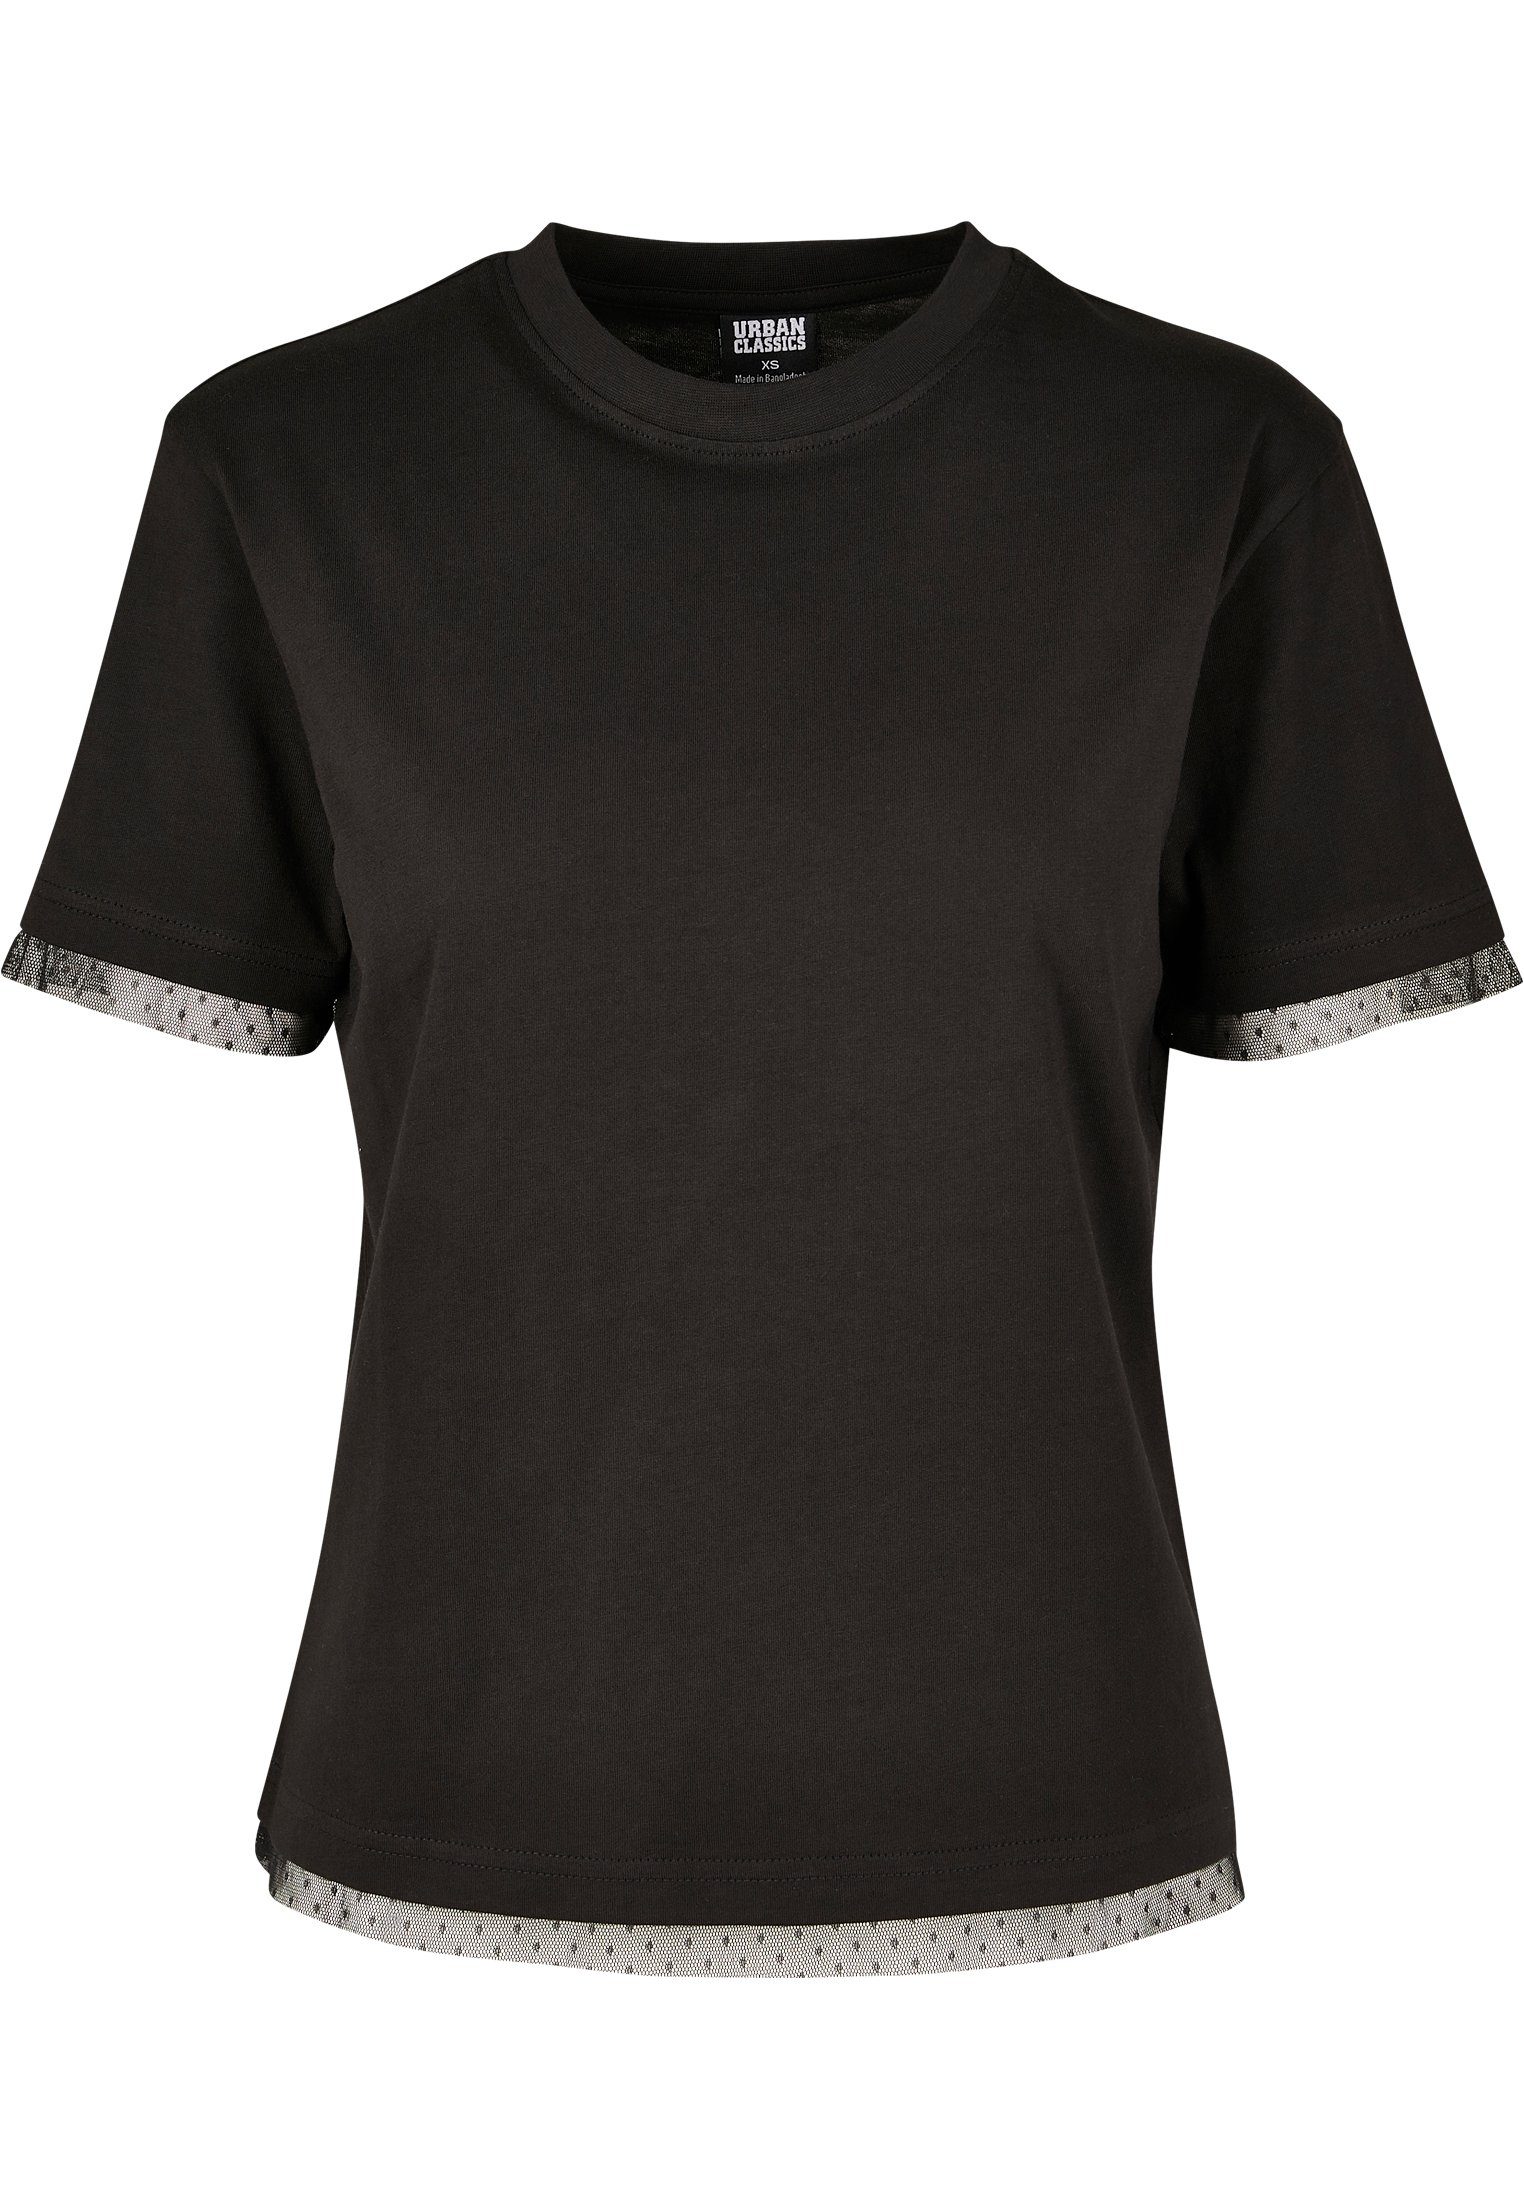 URBAN black Boxy TB2800 CLASSICS Hem T-Shirt Lace